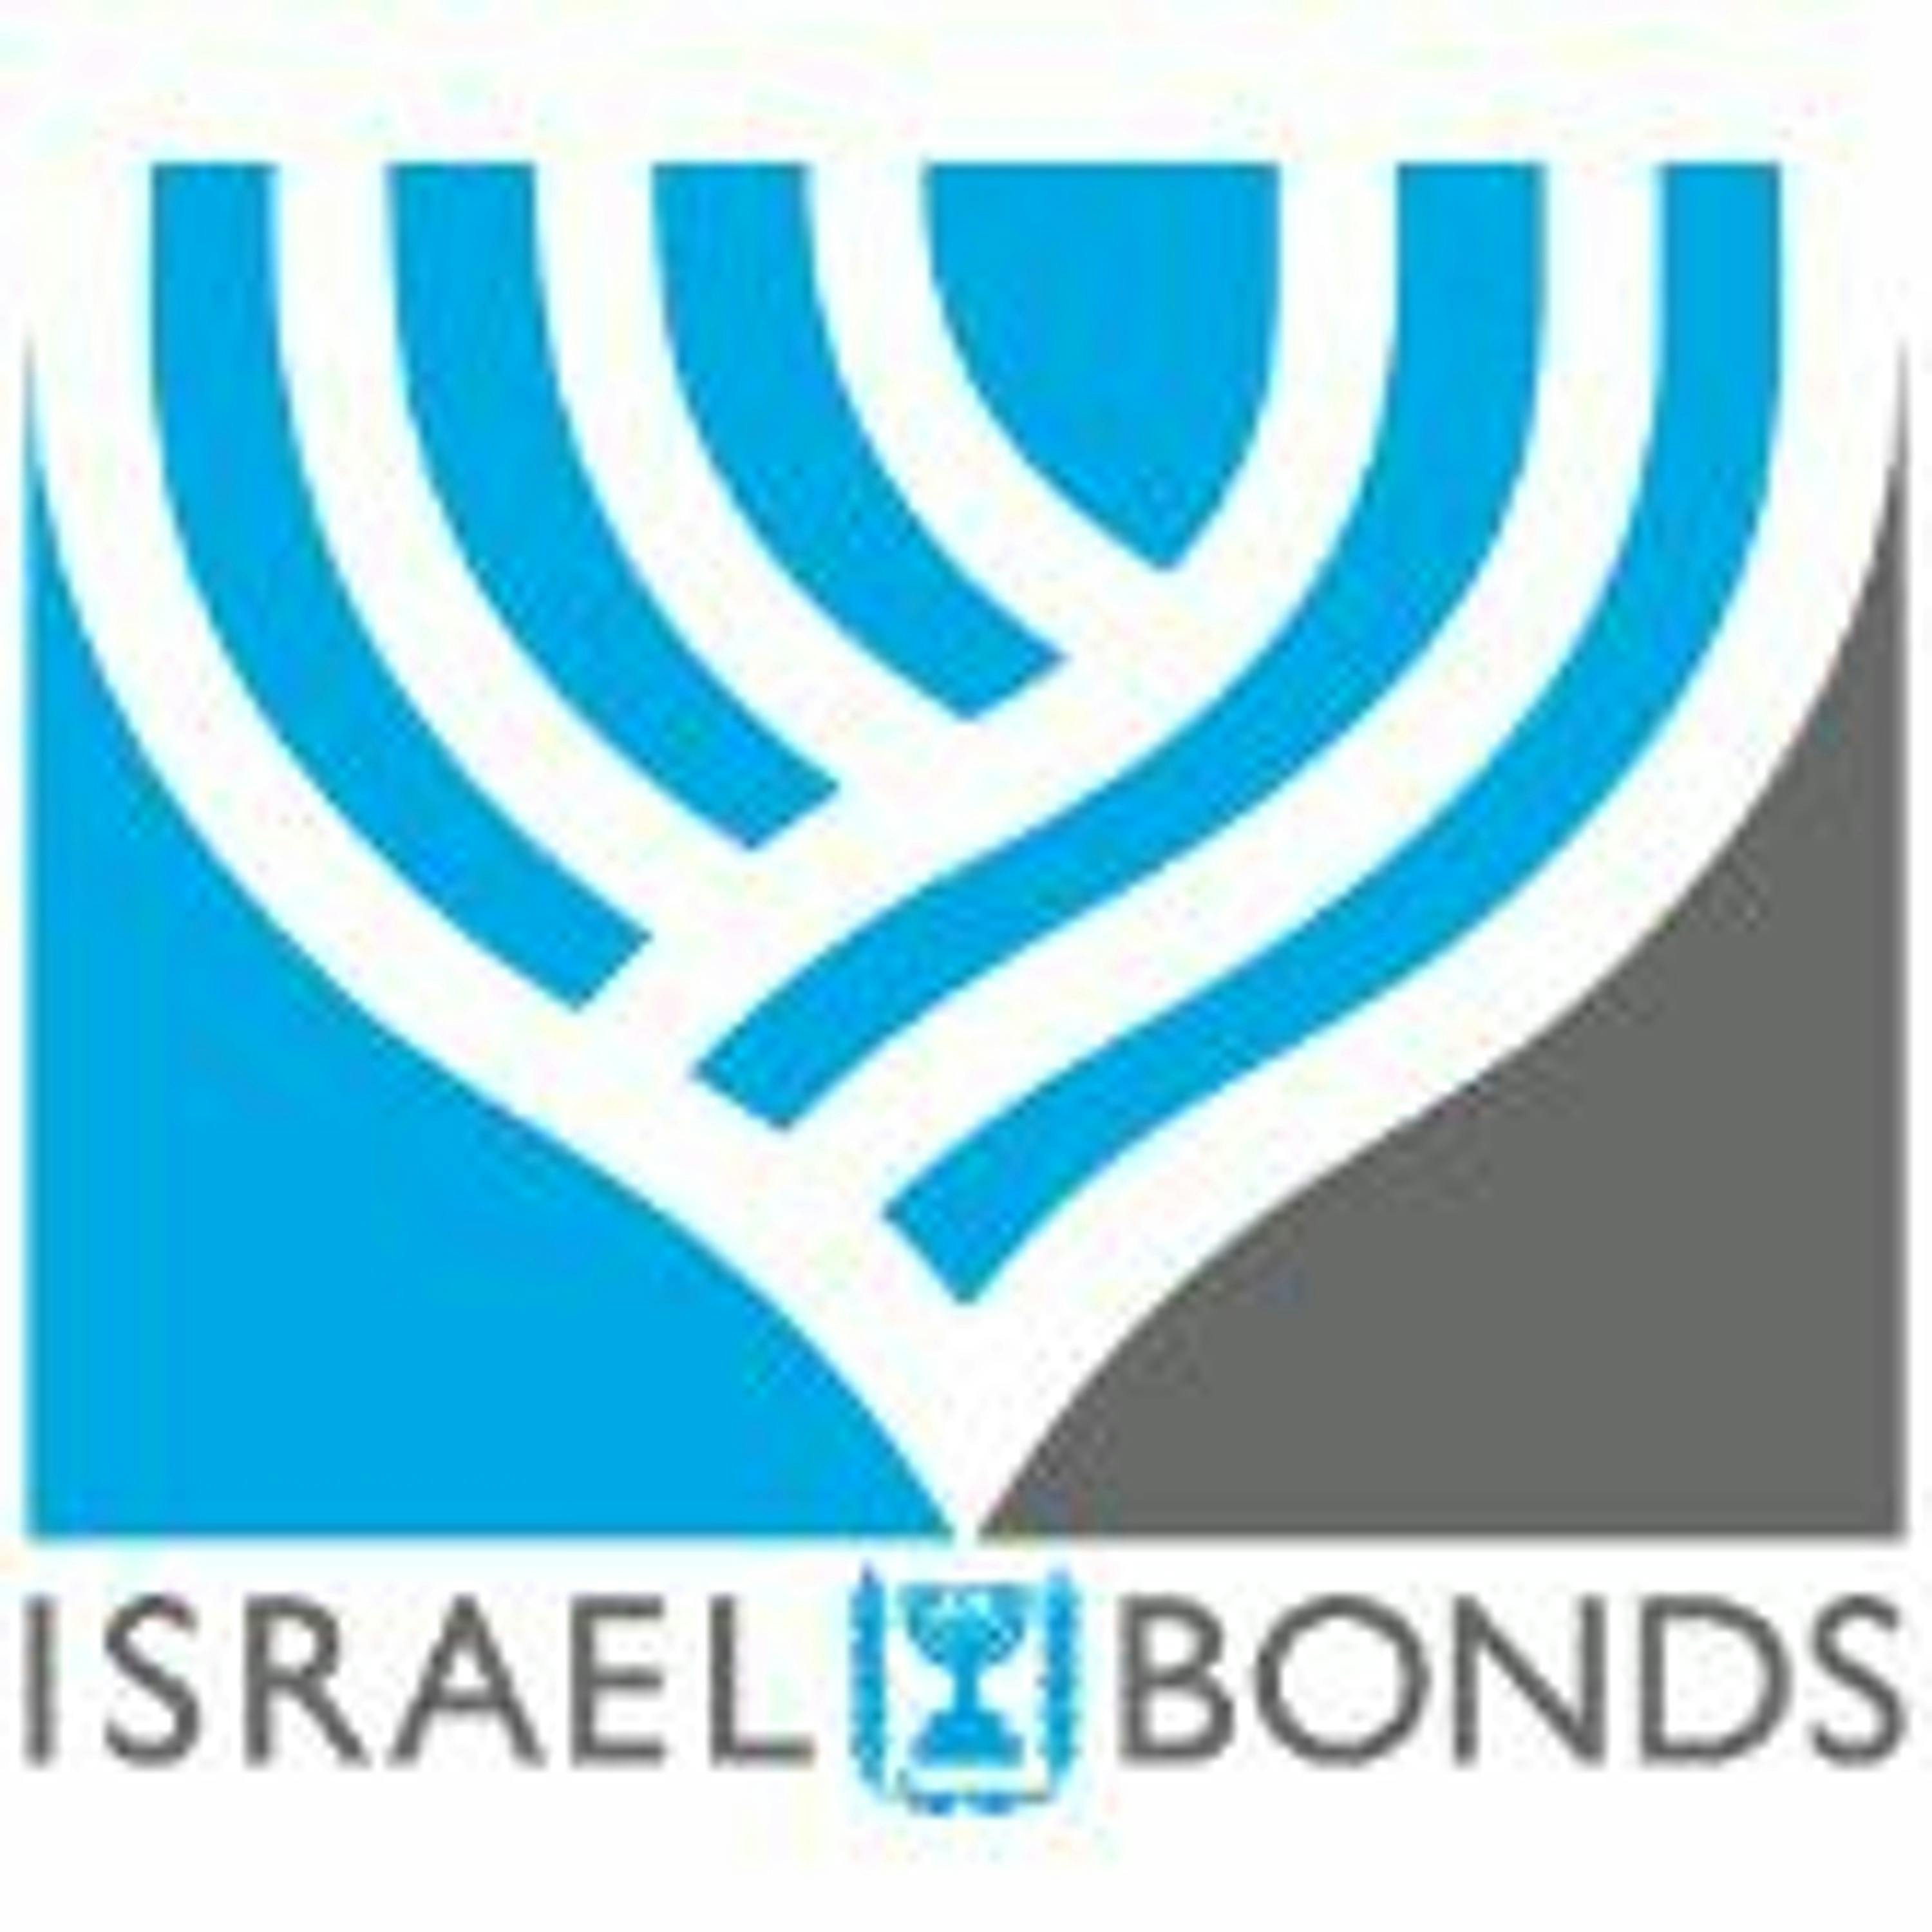 82: Israel Bonds, Invest in Israel: Arnon Perlman's life in public service